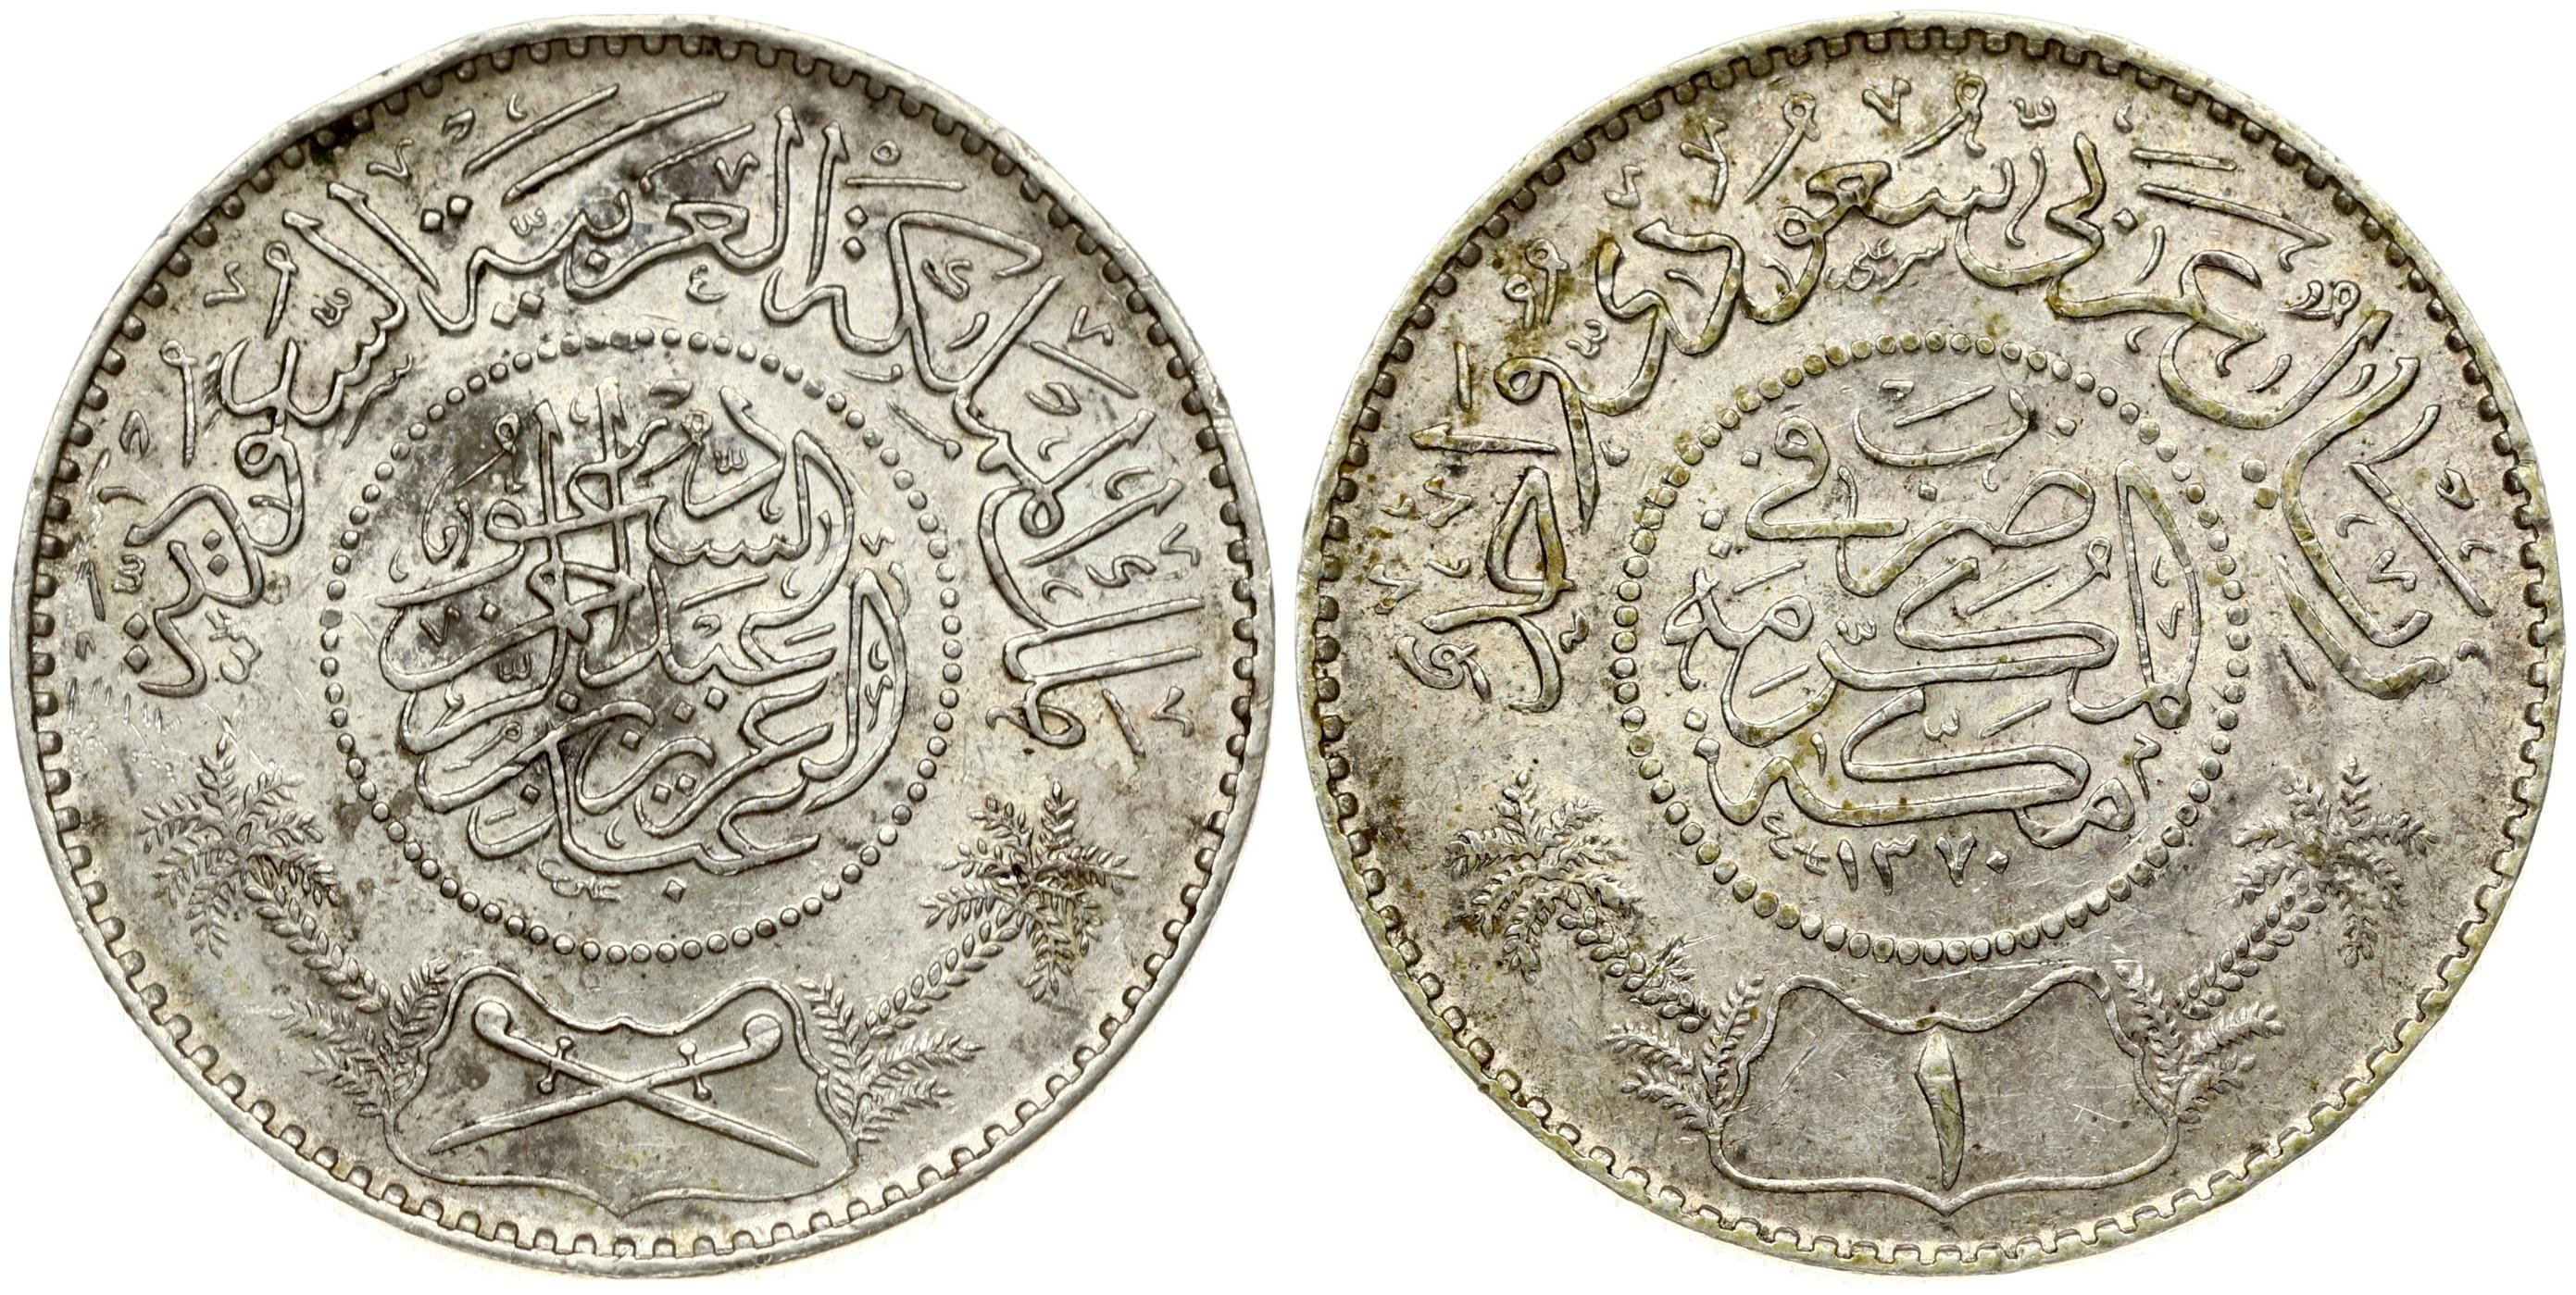 ibn saud 1932